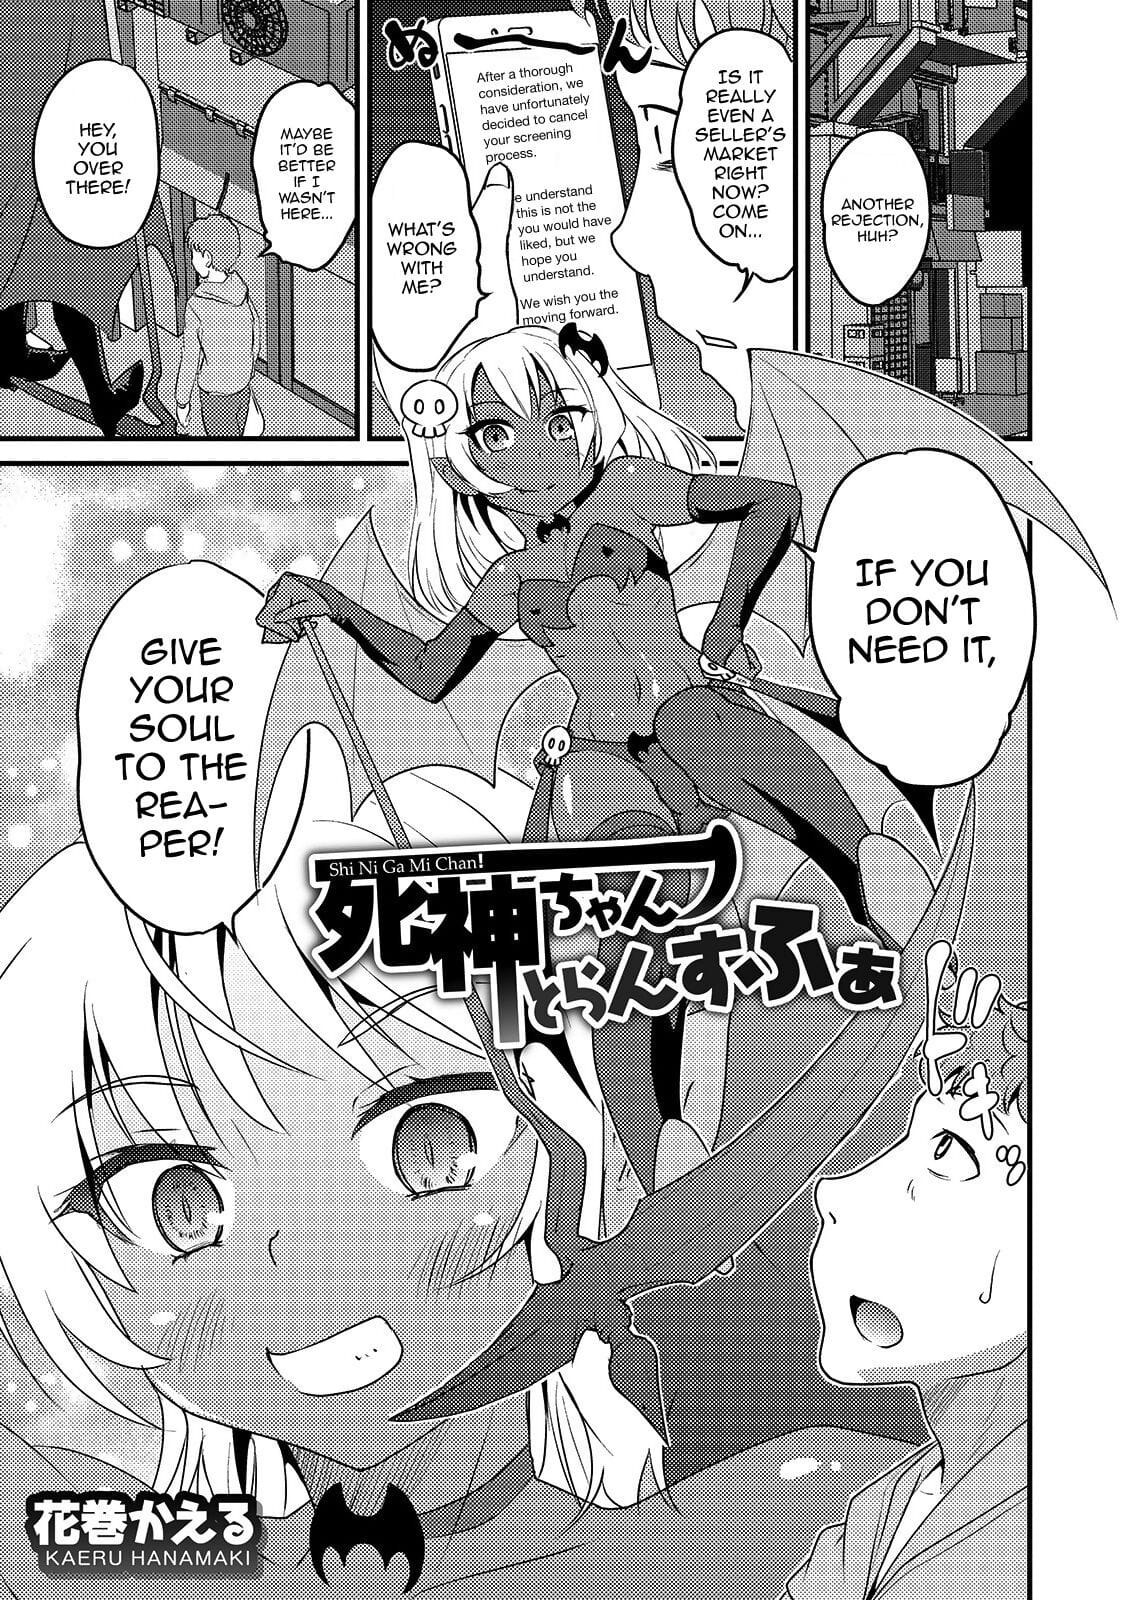 Shinigami-chan Transfer page 1